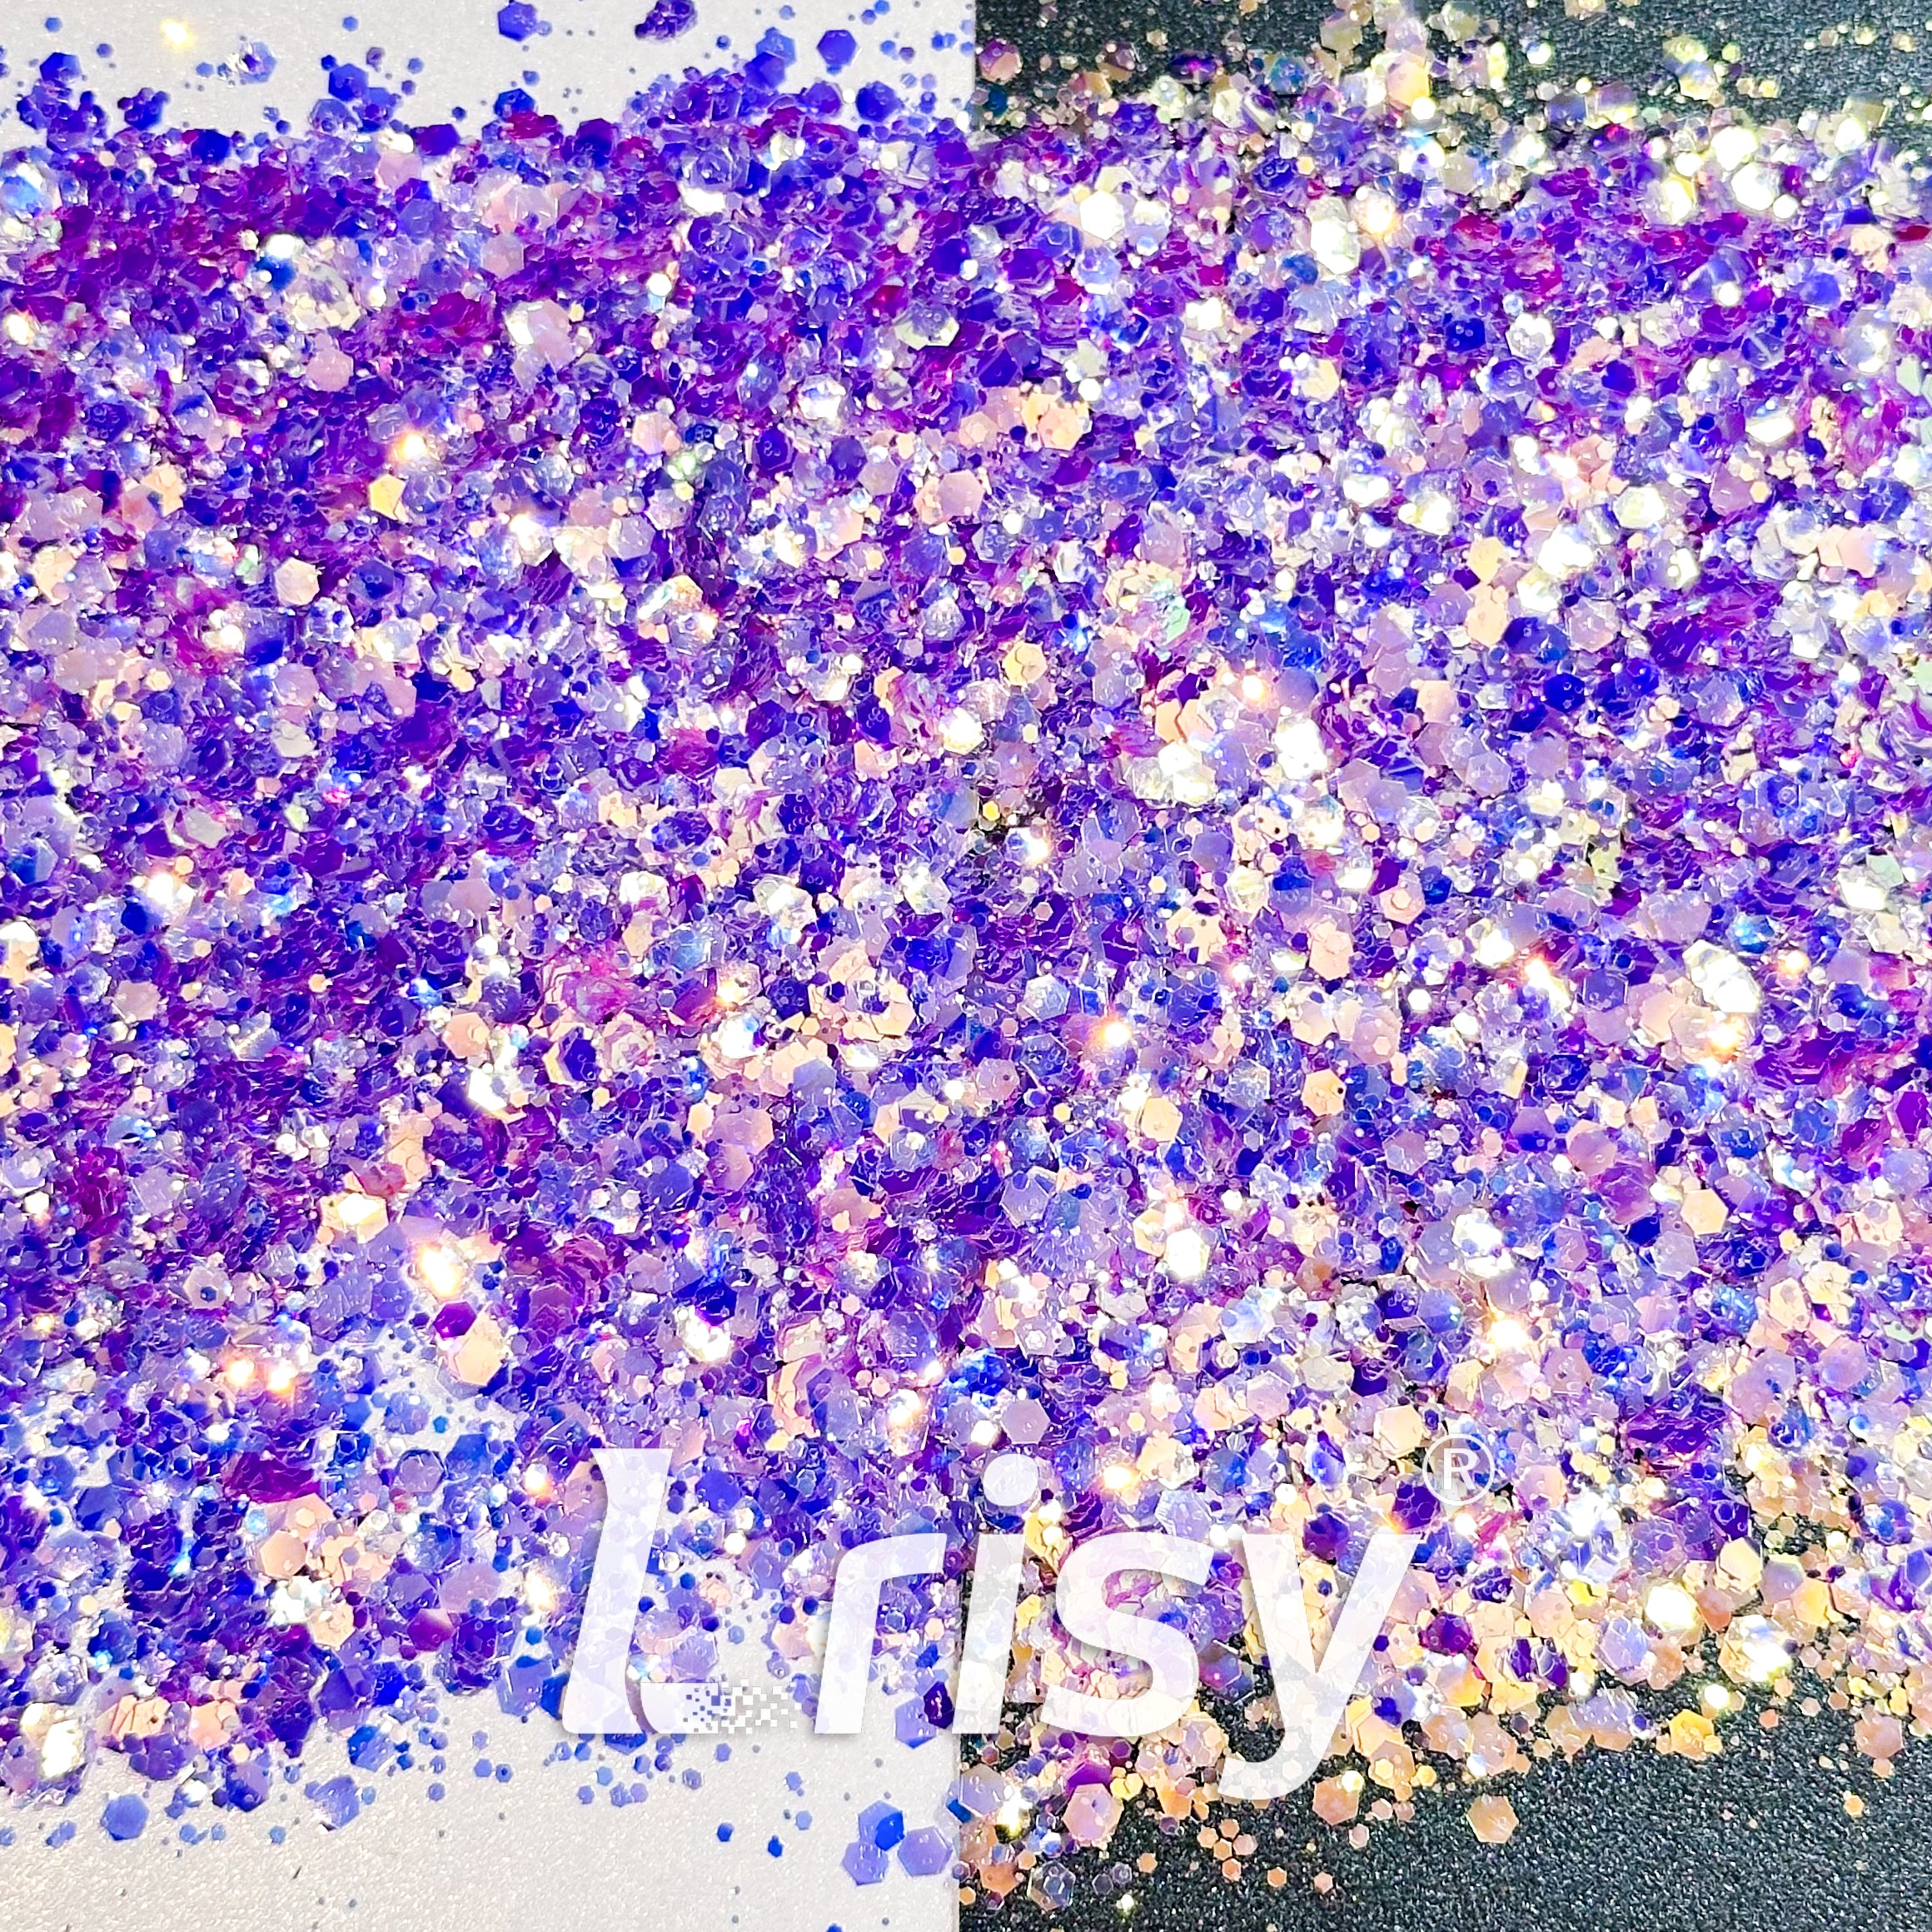 General Mixed High Brightness Iridescent Purple Glitter HB809